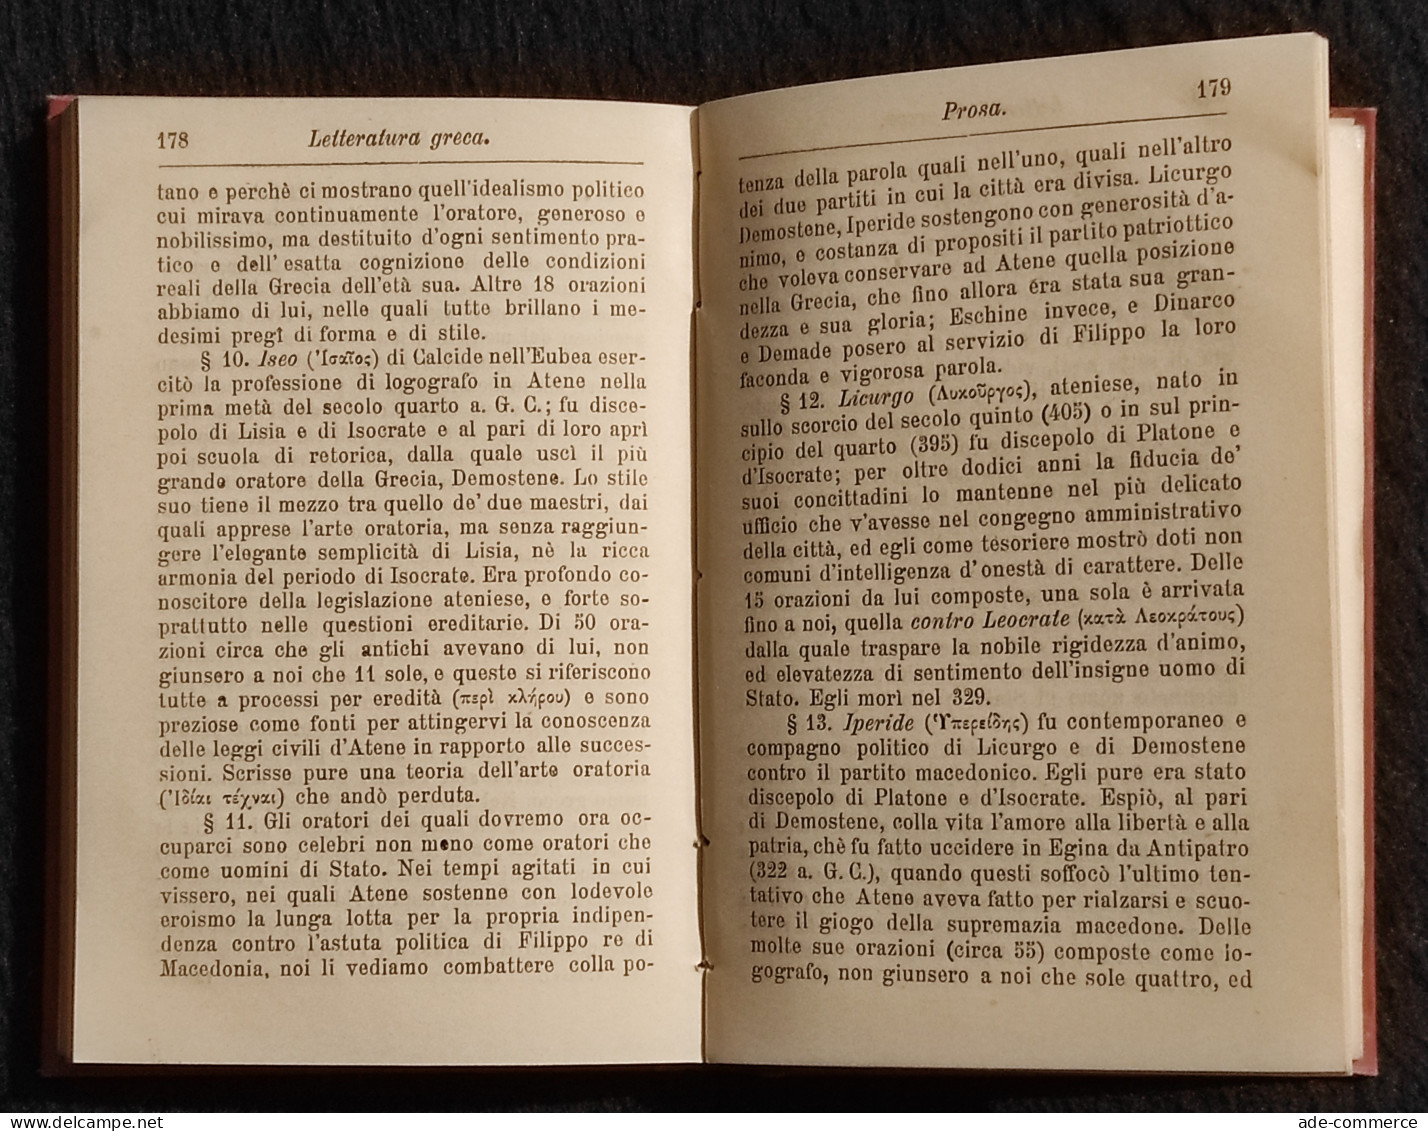 Lettura Greca - V. Inama - Manuali Hoepli - 1886 - Manuels Pour Collectionneurs